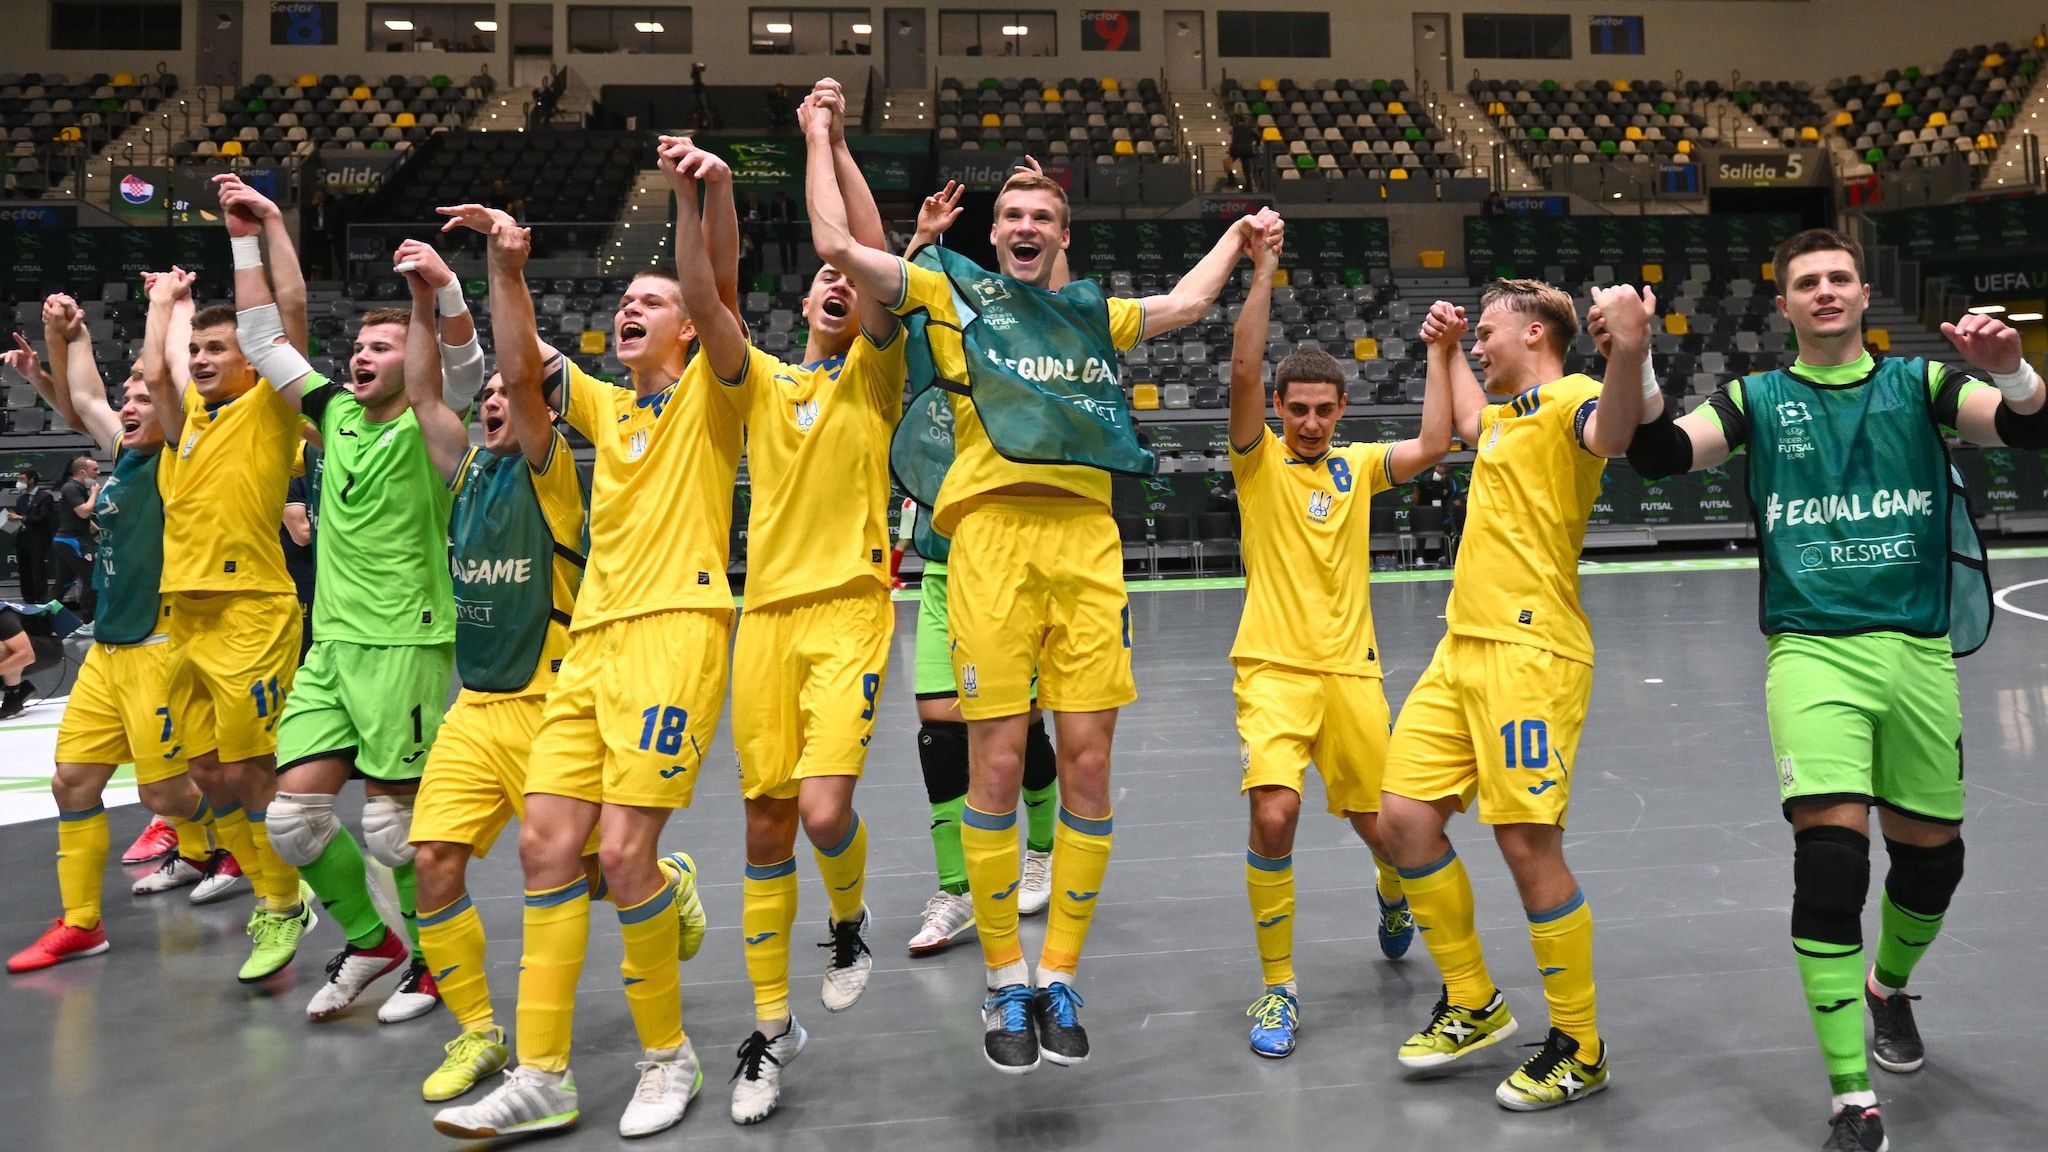 UEFA Under-19 Futsal EURO Program: Toate meciurile